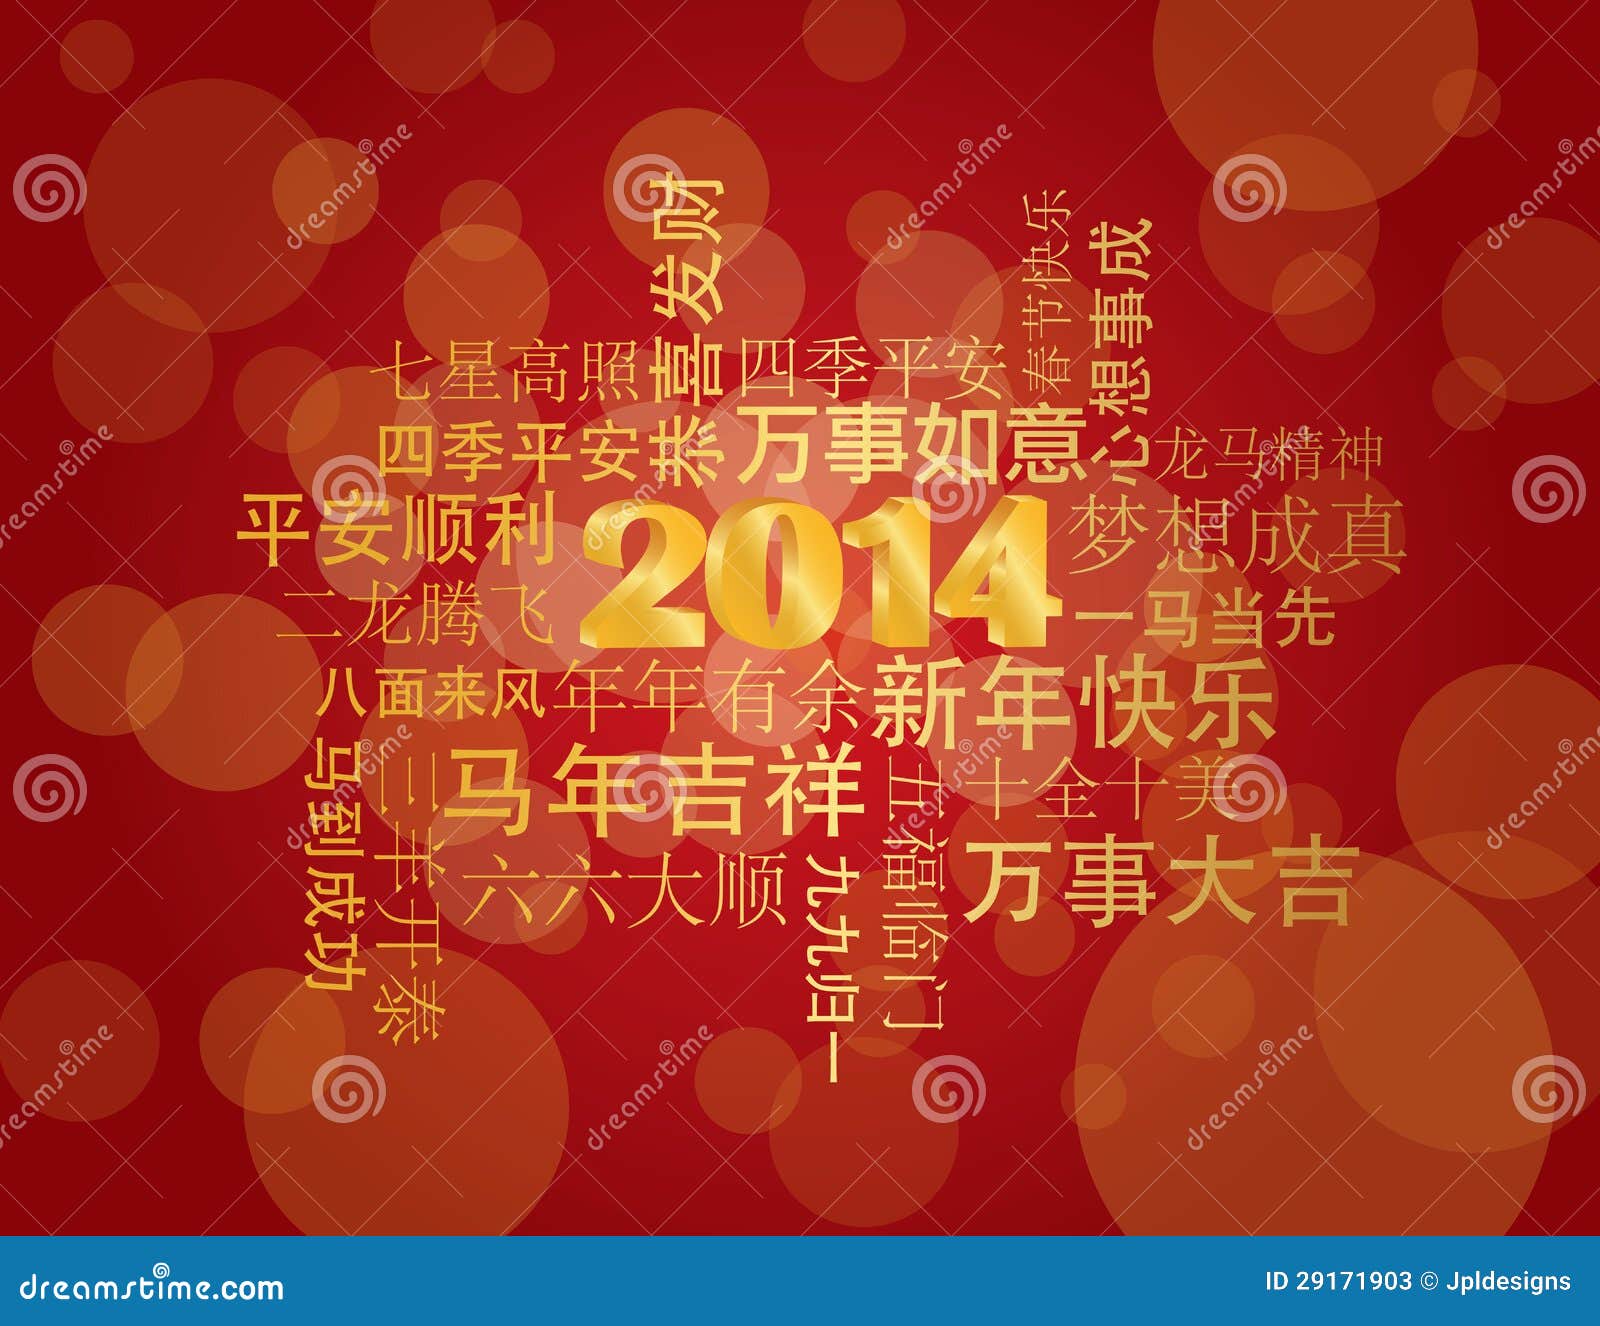 lunar new year 2014 clipart - photo #36